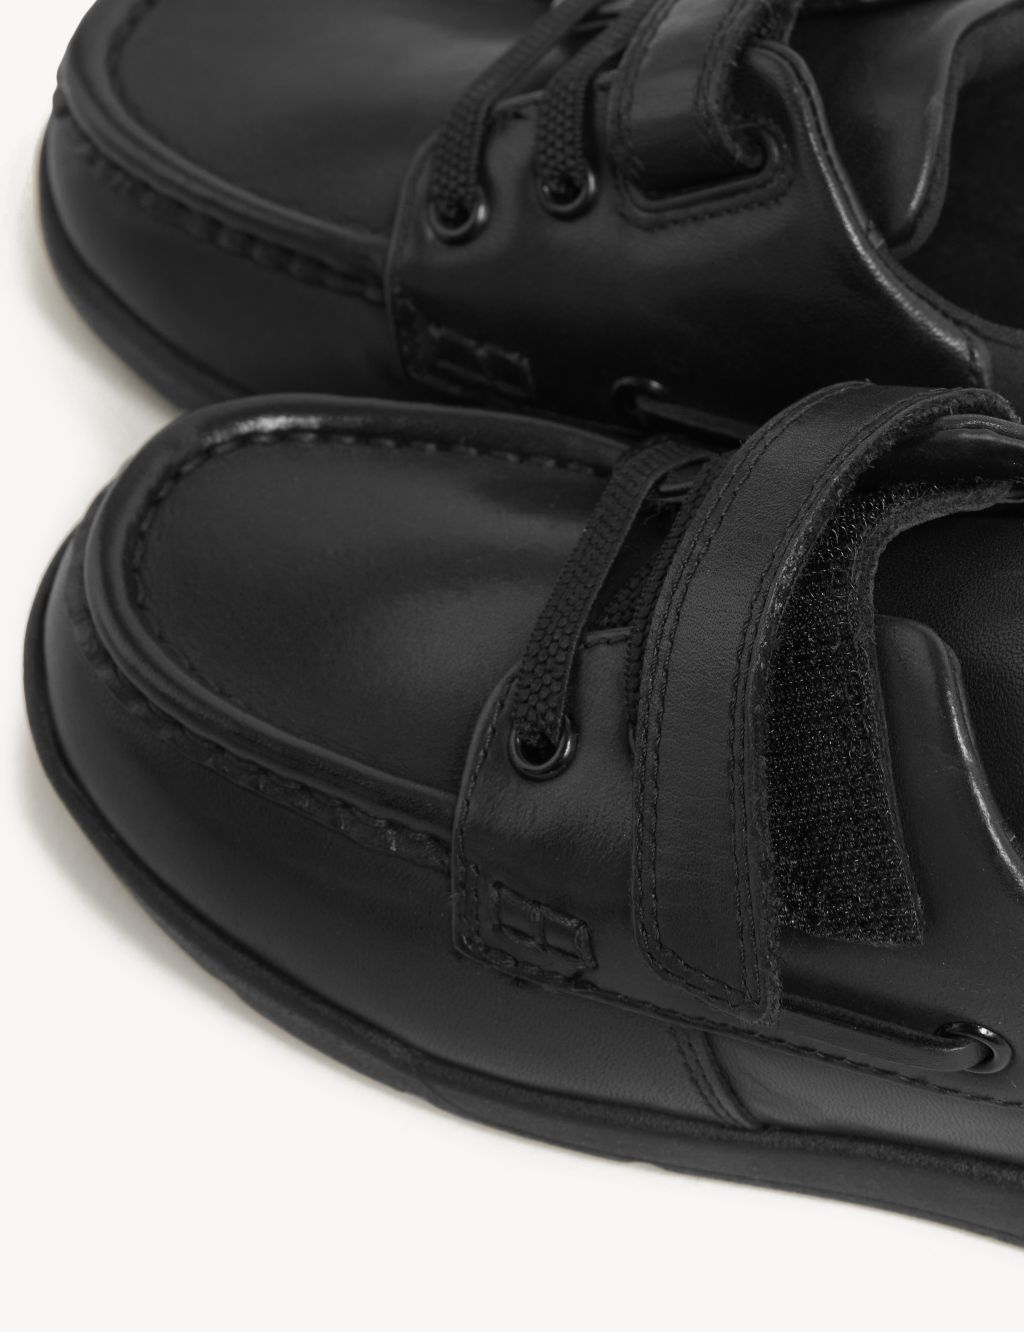 Leather Freshfeet School Shoe (8 Small - 2 Large) image 2